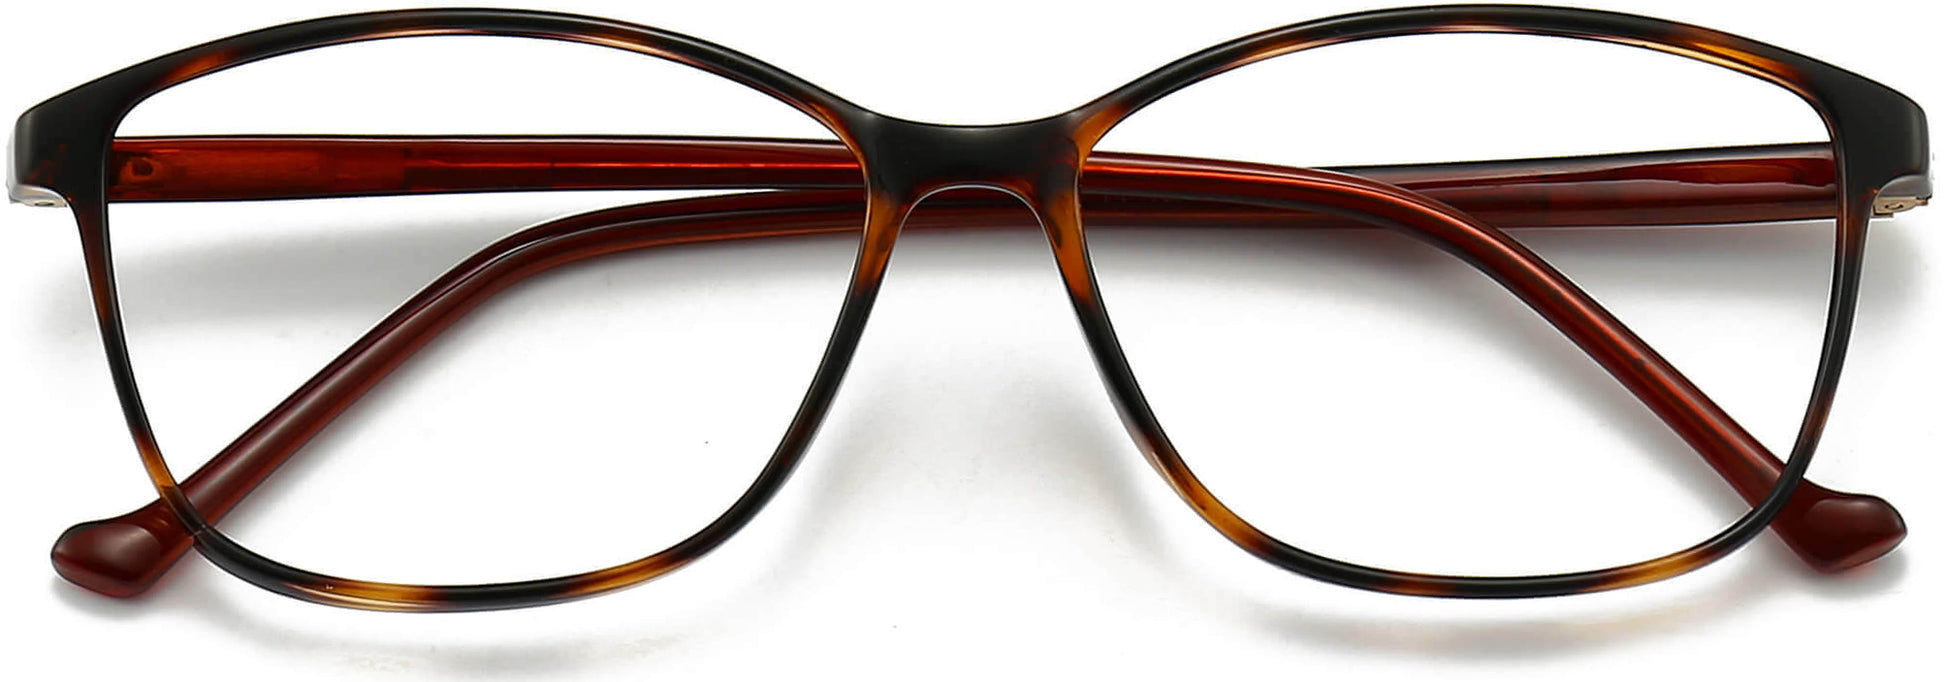 Aniyah Cateye Tortoise Eyeglasses from ANRRI, closed view